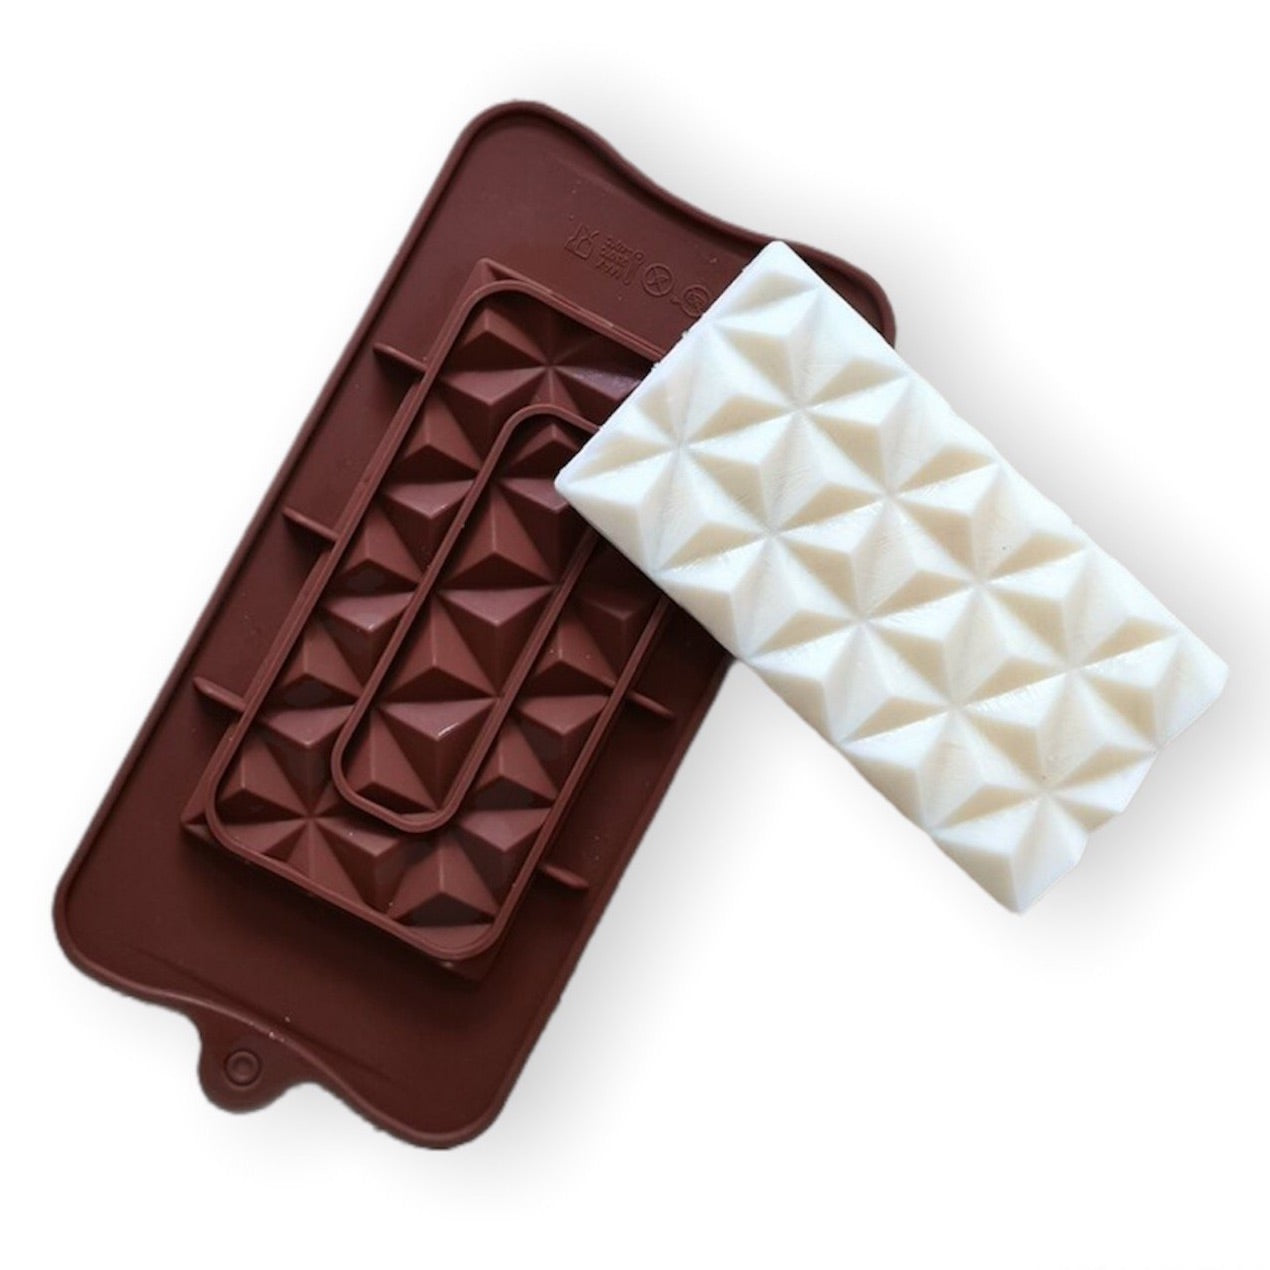 Silicone Mold Chocolate Shapes, Silicone Geometric Shape